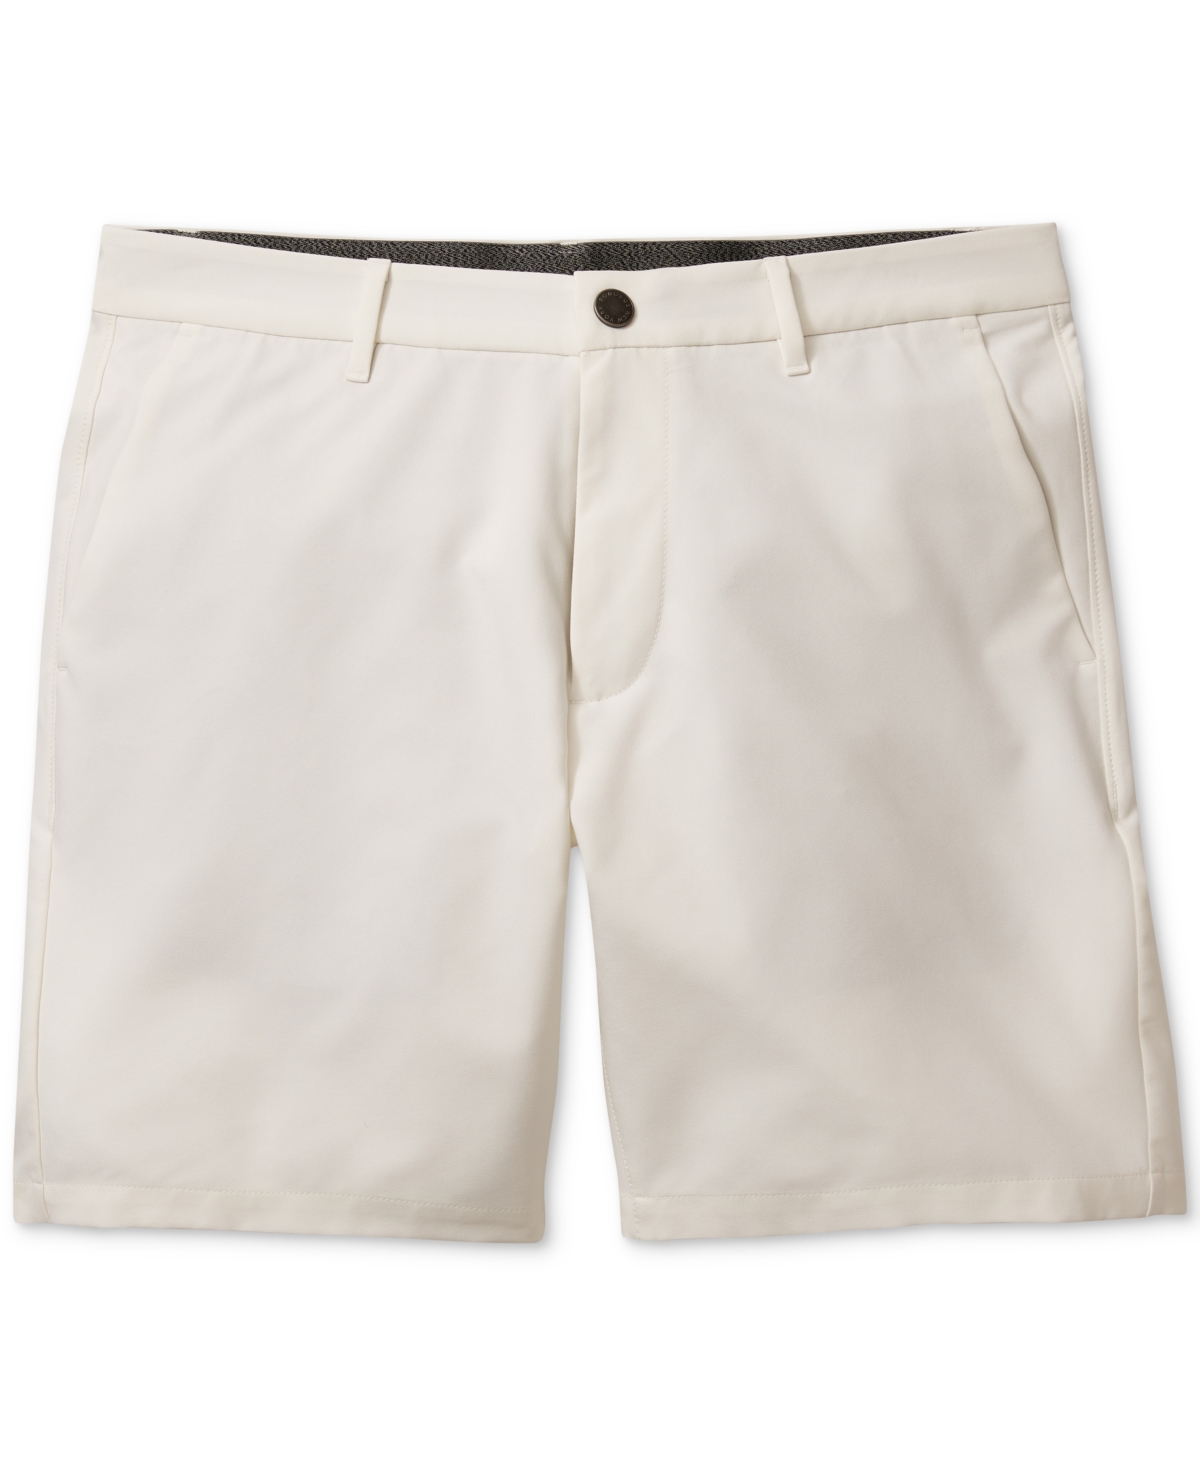 Men's All-Season Standard-Fit 7" Golf Shorts - Ash Grey